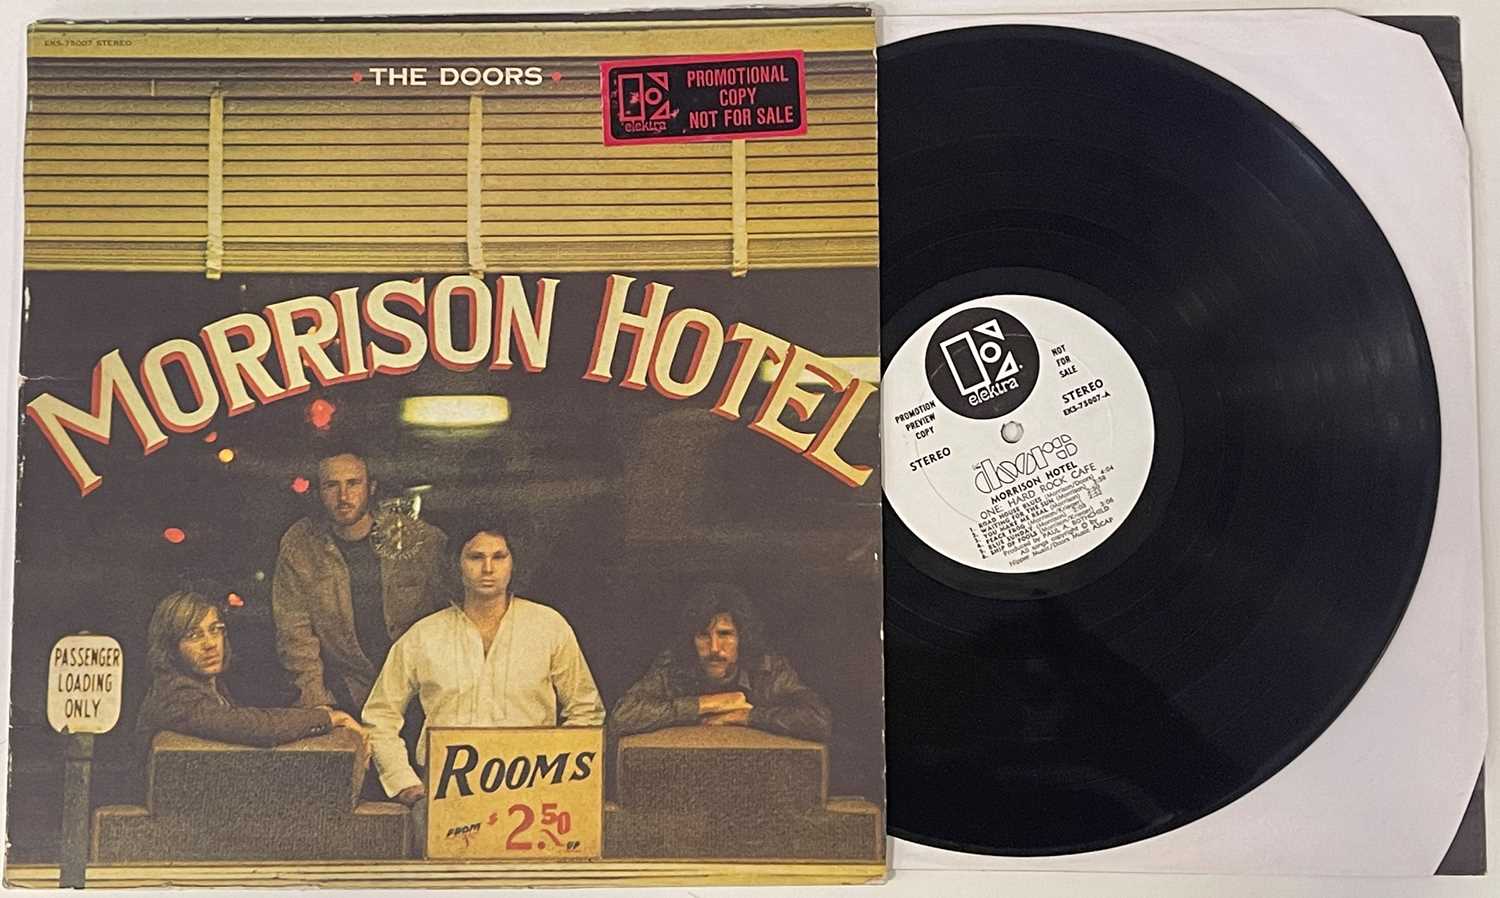 Lot 31 - THE DOORS - MORRISON HOTEL LP (ORIGINAL US PROMO COPY - ELEKTRA EKS-75007)